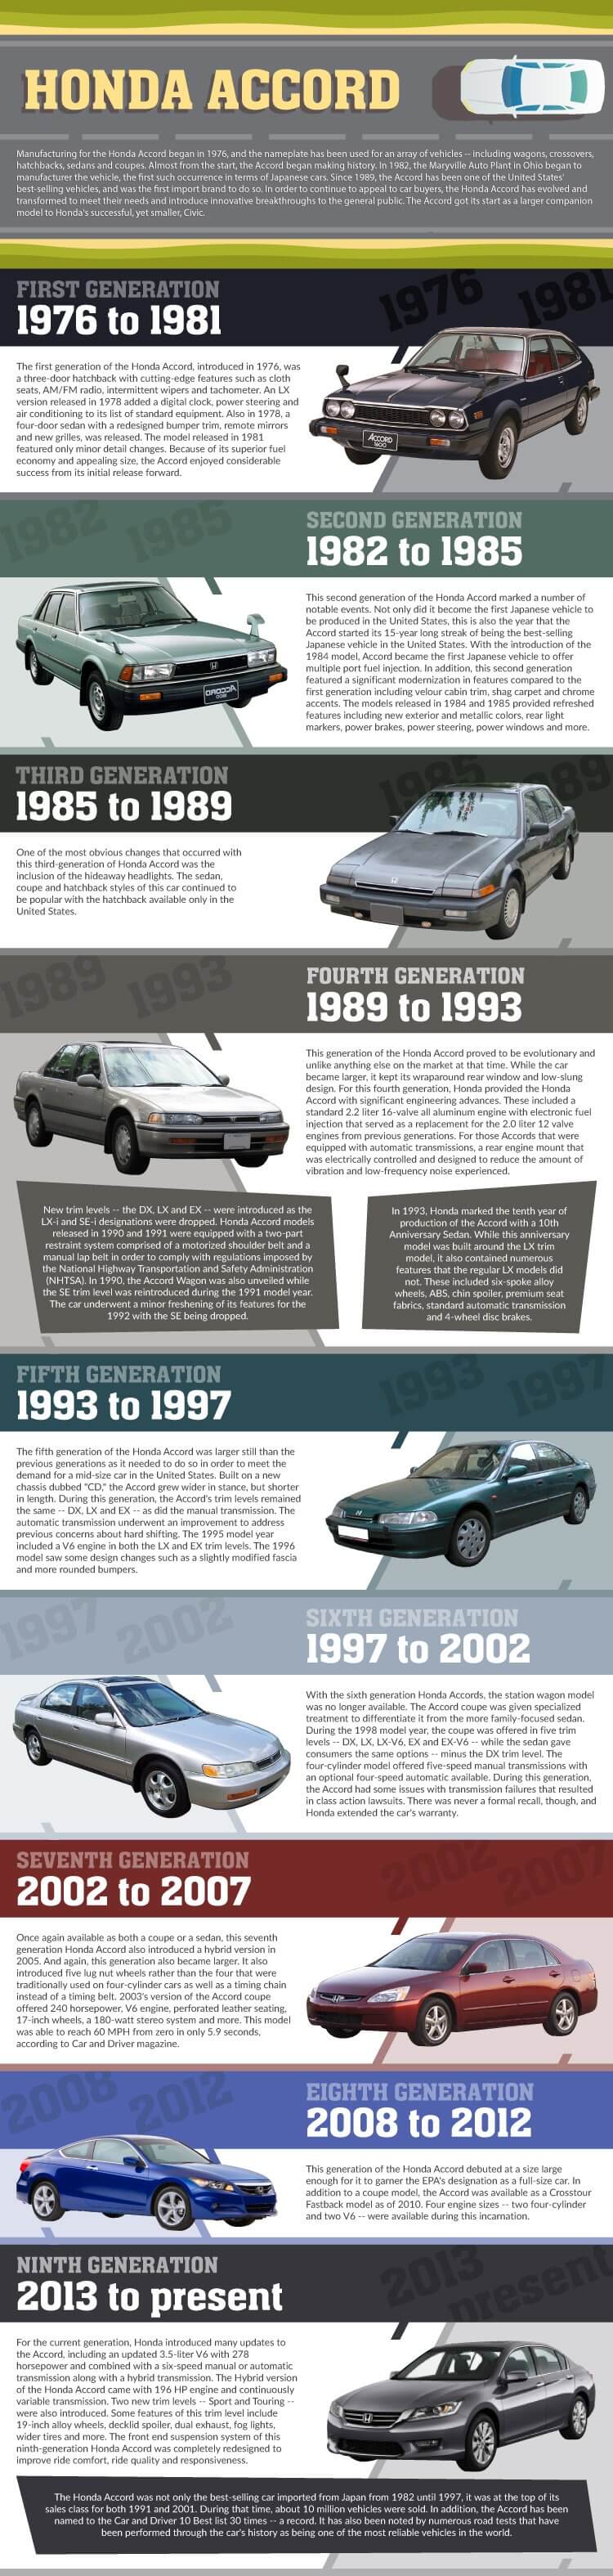 History of the Honda Accord